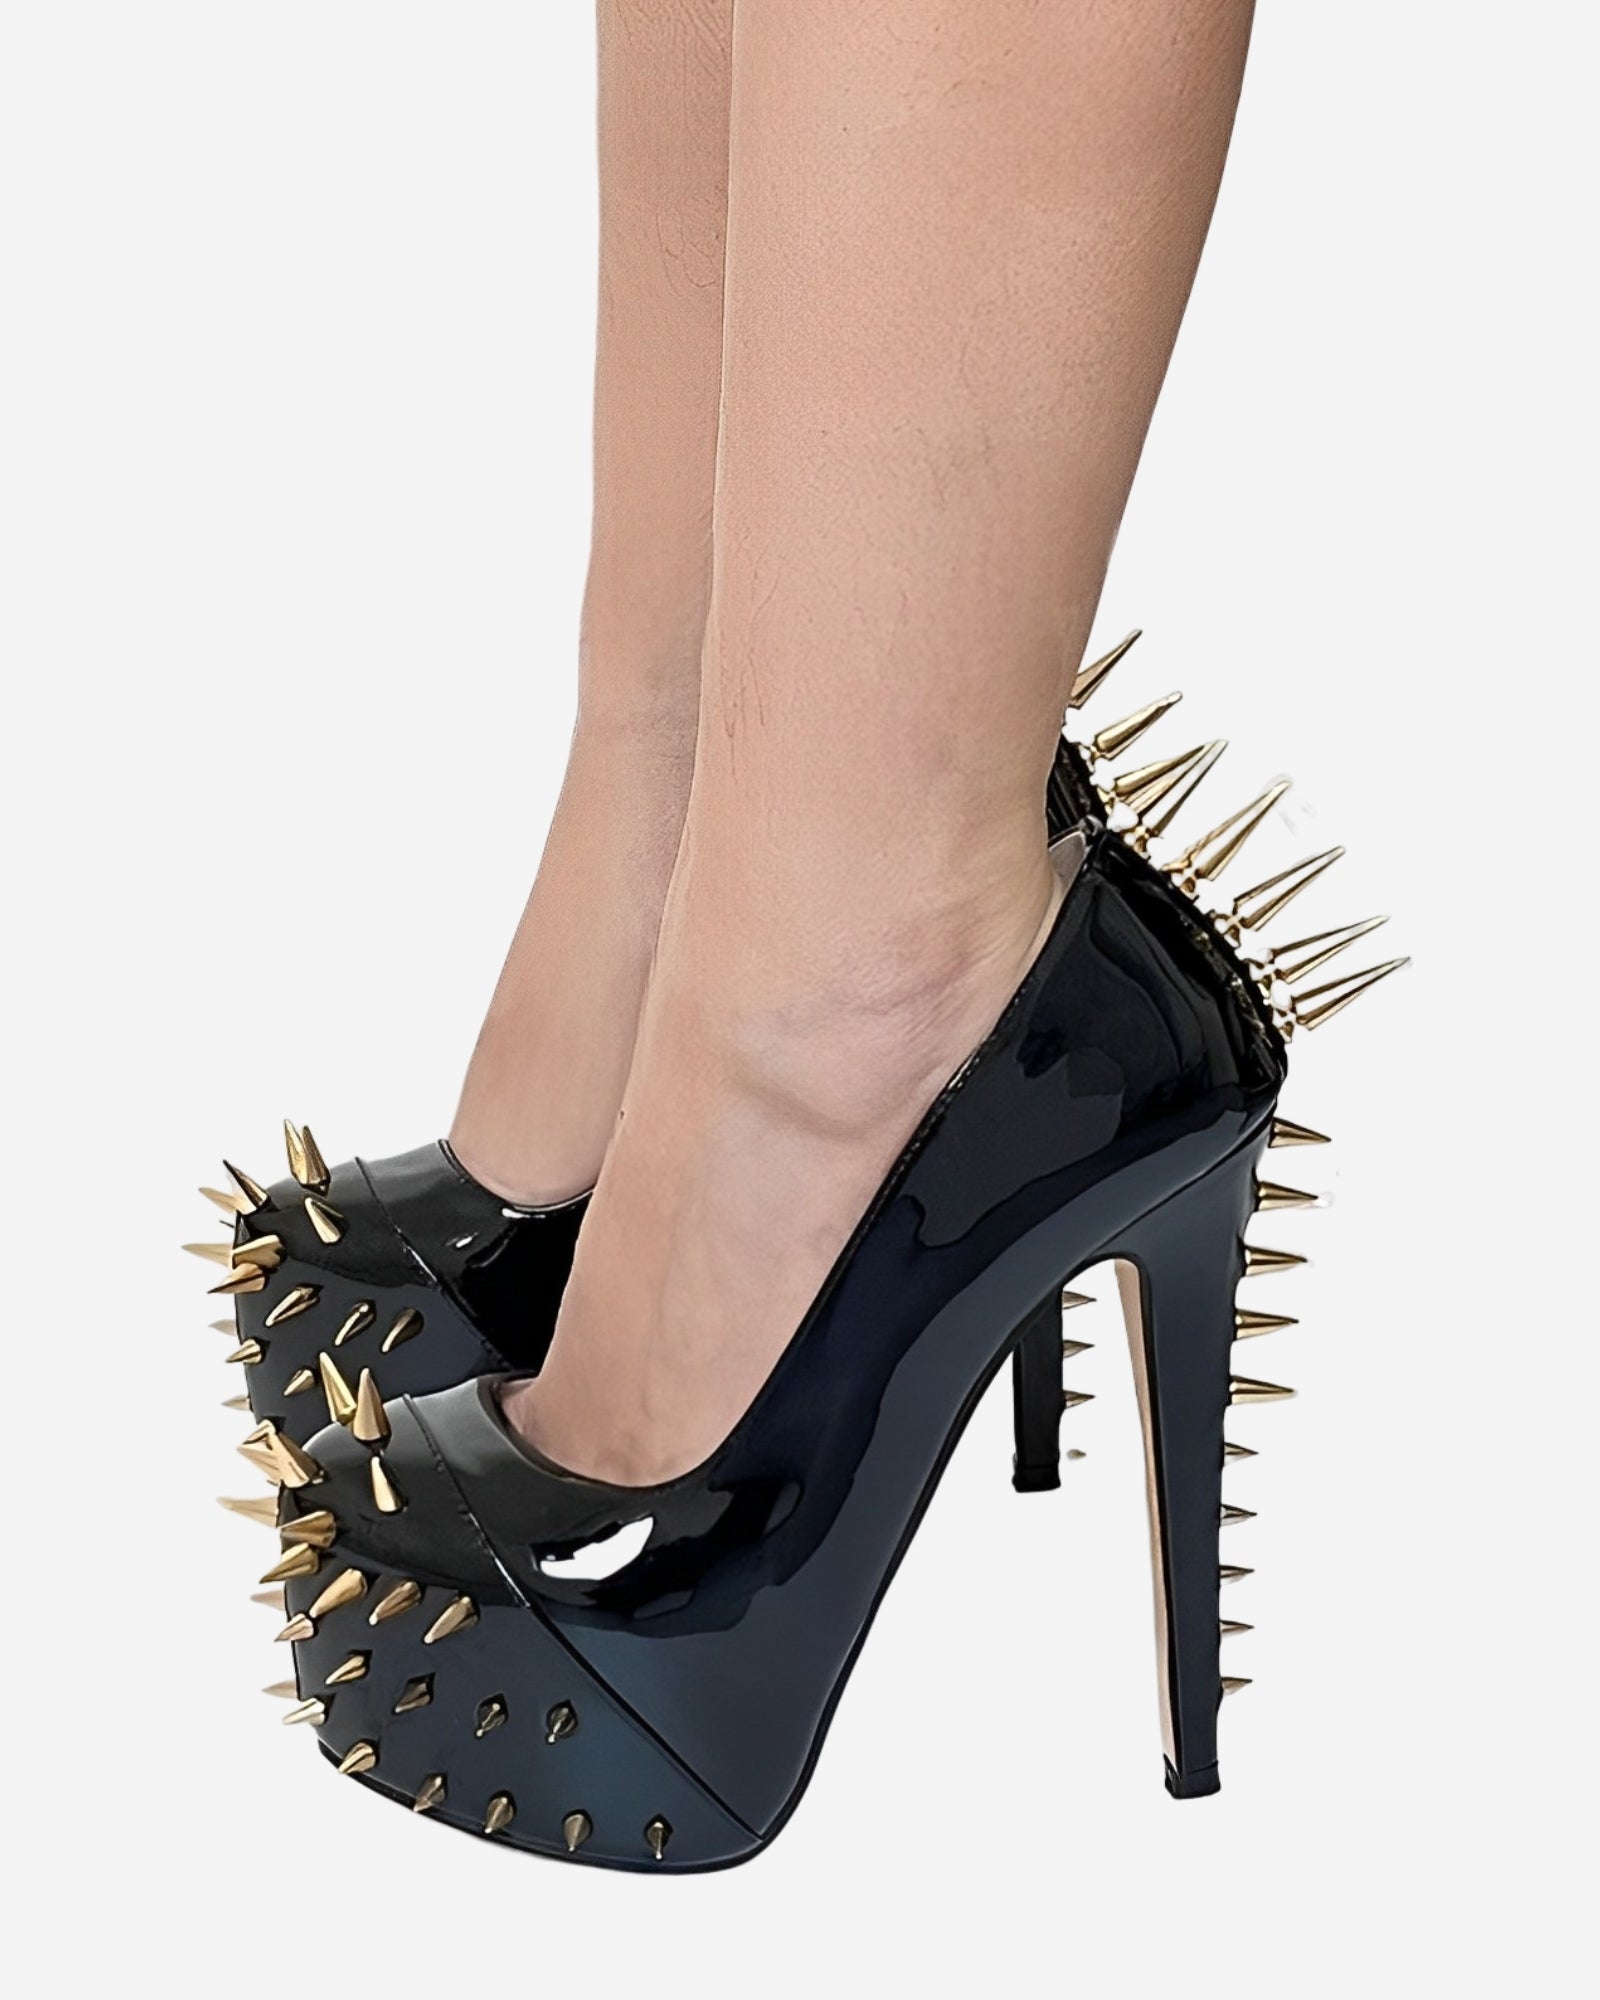 Madden Girl Canon Edgy Spiked Platform Heels Size 10 | Madden girl, Platform  heels, 10 things